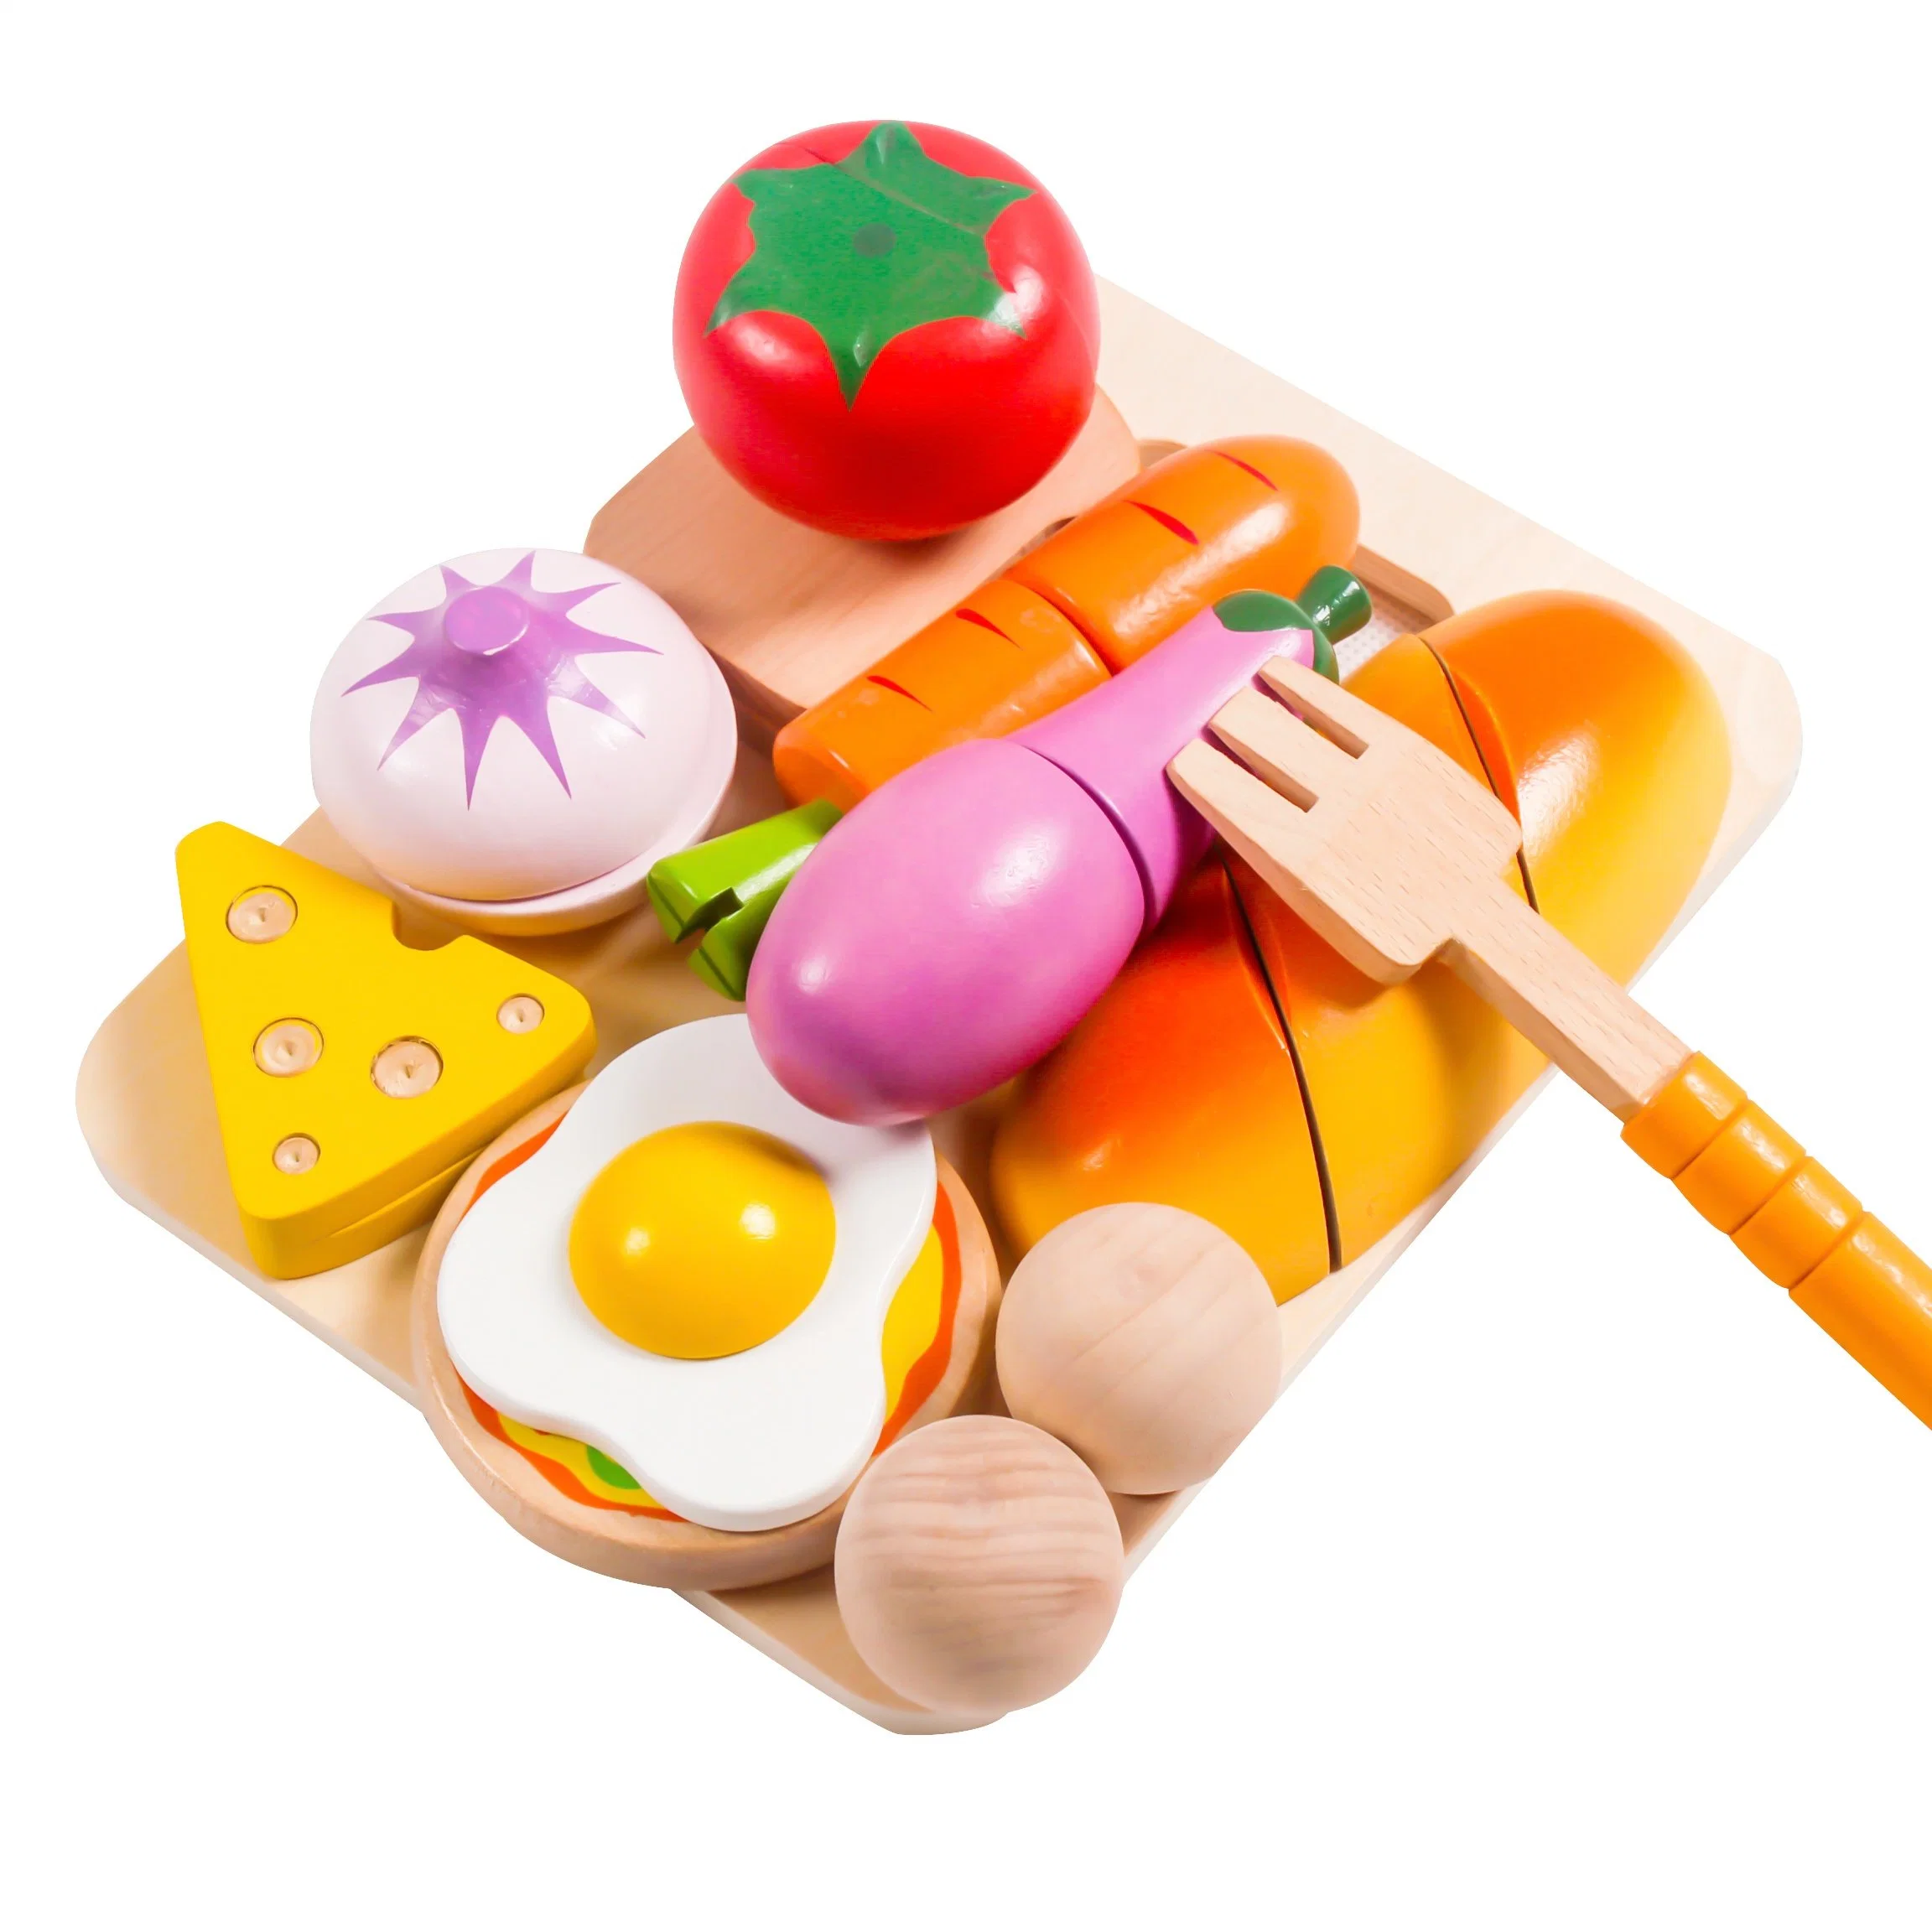 Customized Wooden Pretend Supermarket Fruits Vegetable Food Toys Set for Kids